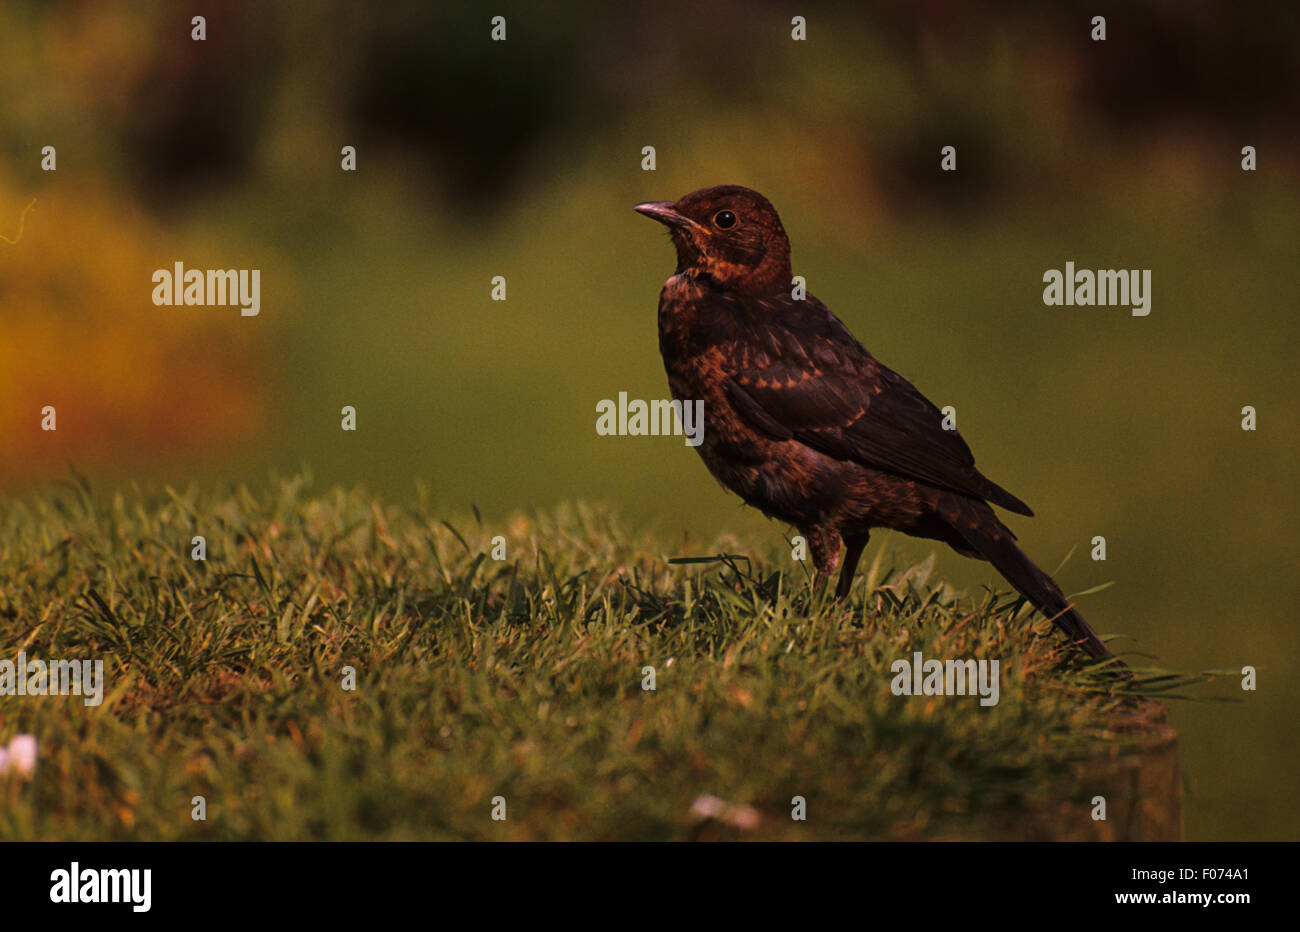 Blackbird taken in profile looking left standing on grassy mound Stock Photo